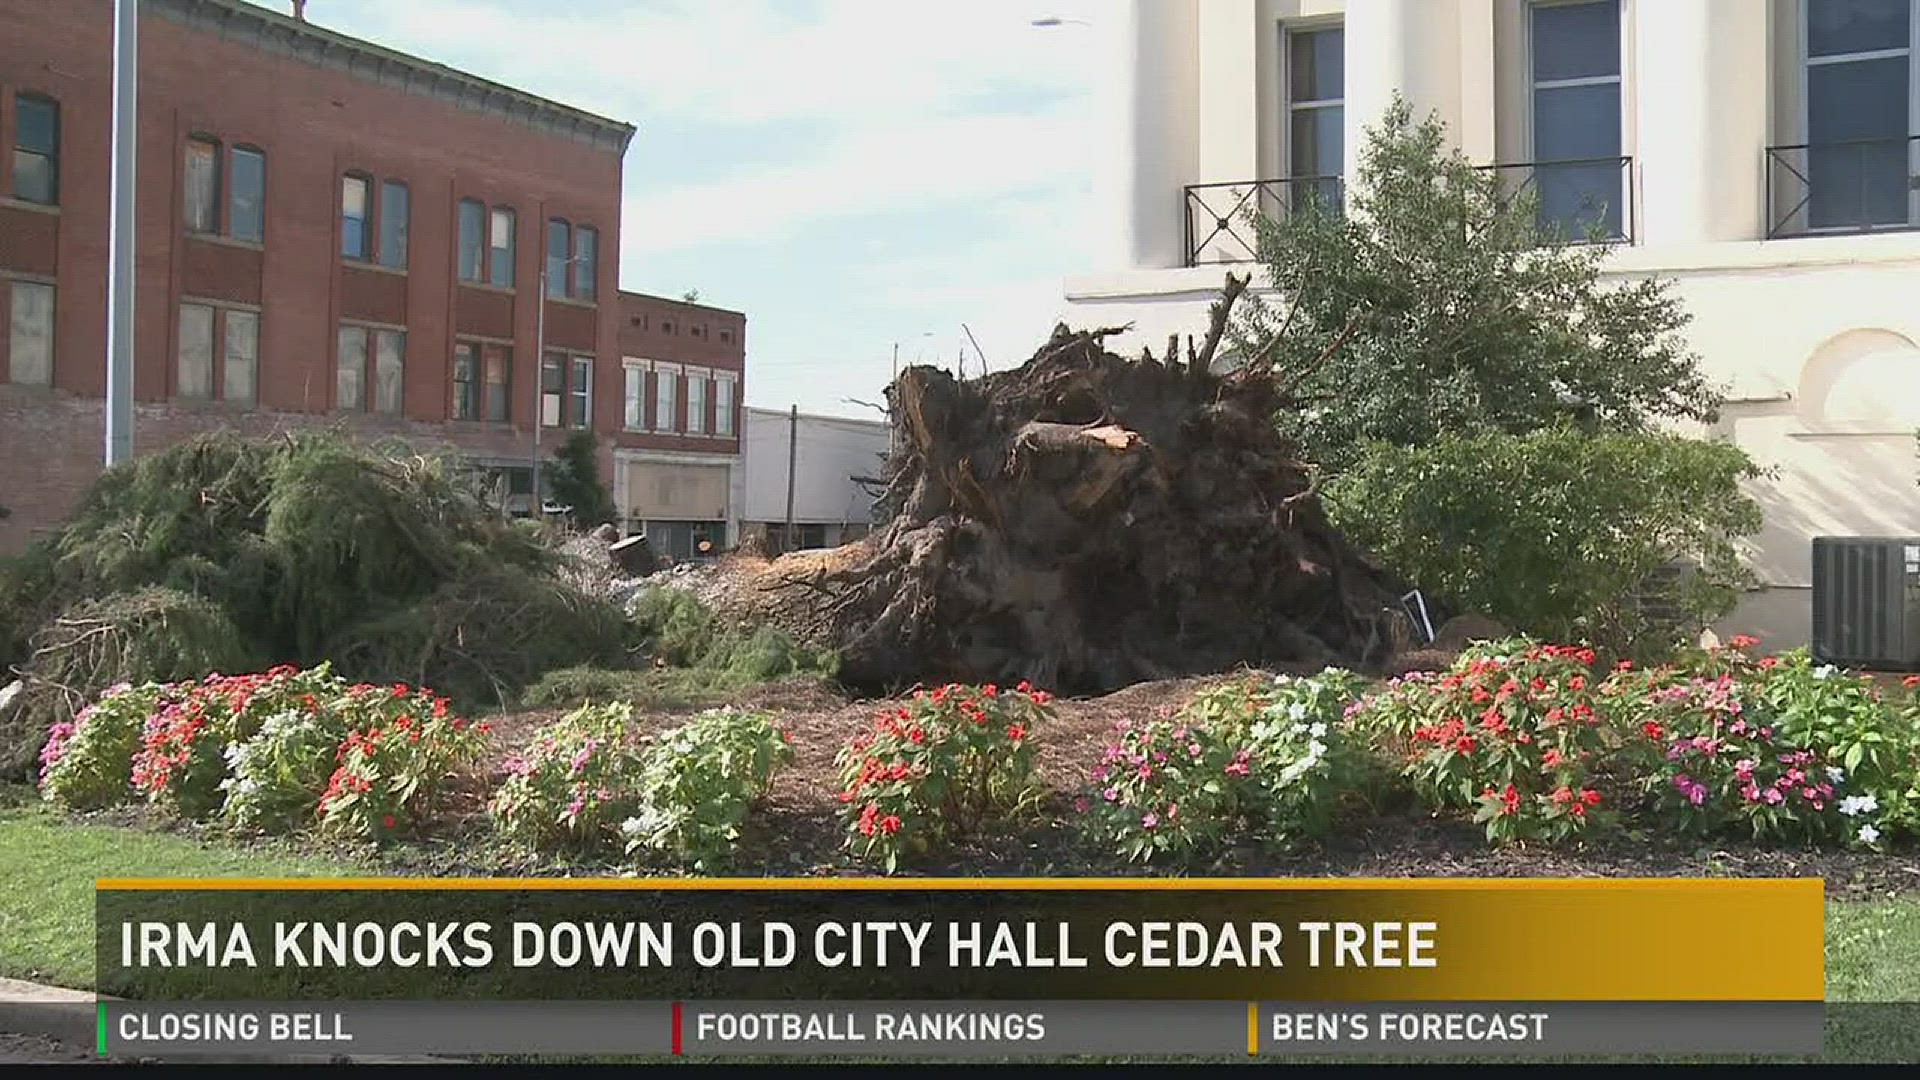 Irma knocks down old City hall cedar tree